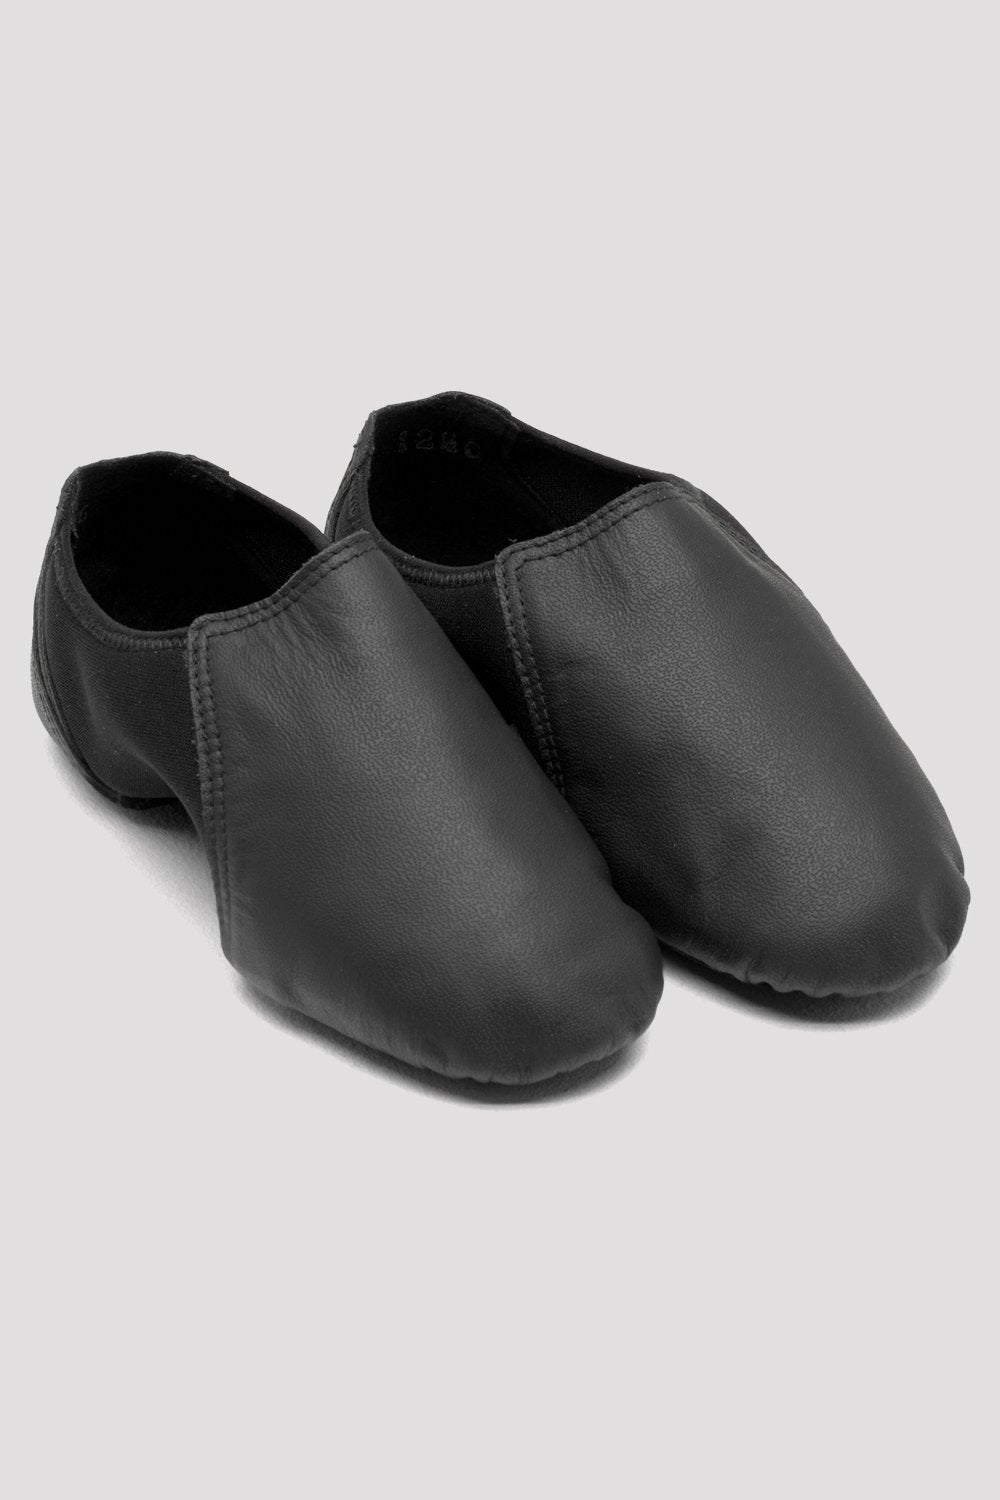 Spark leather & neoprene jazz shoes (Bloch S0497)